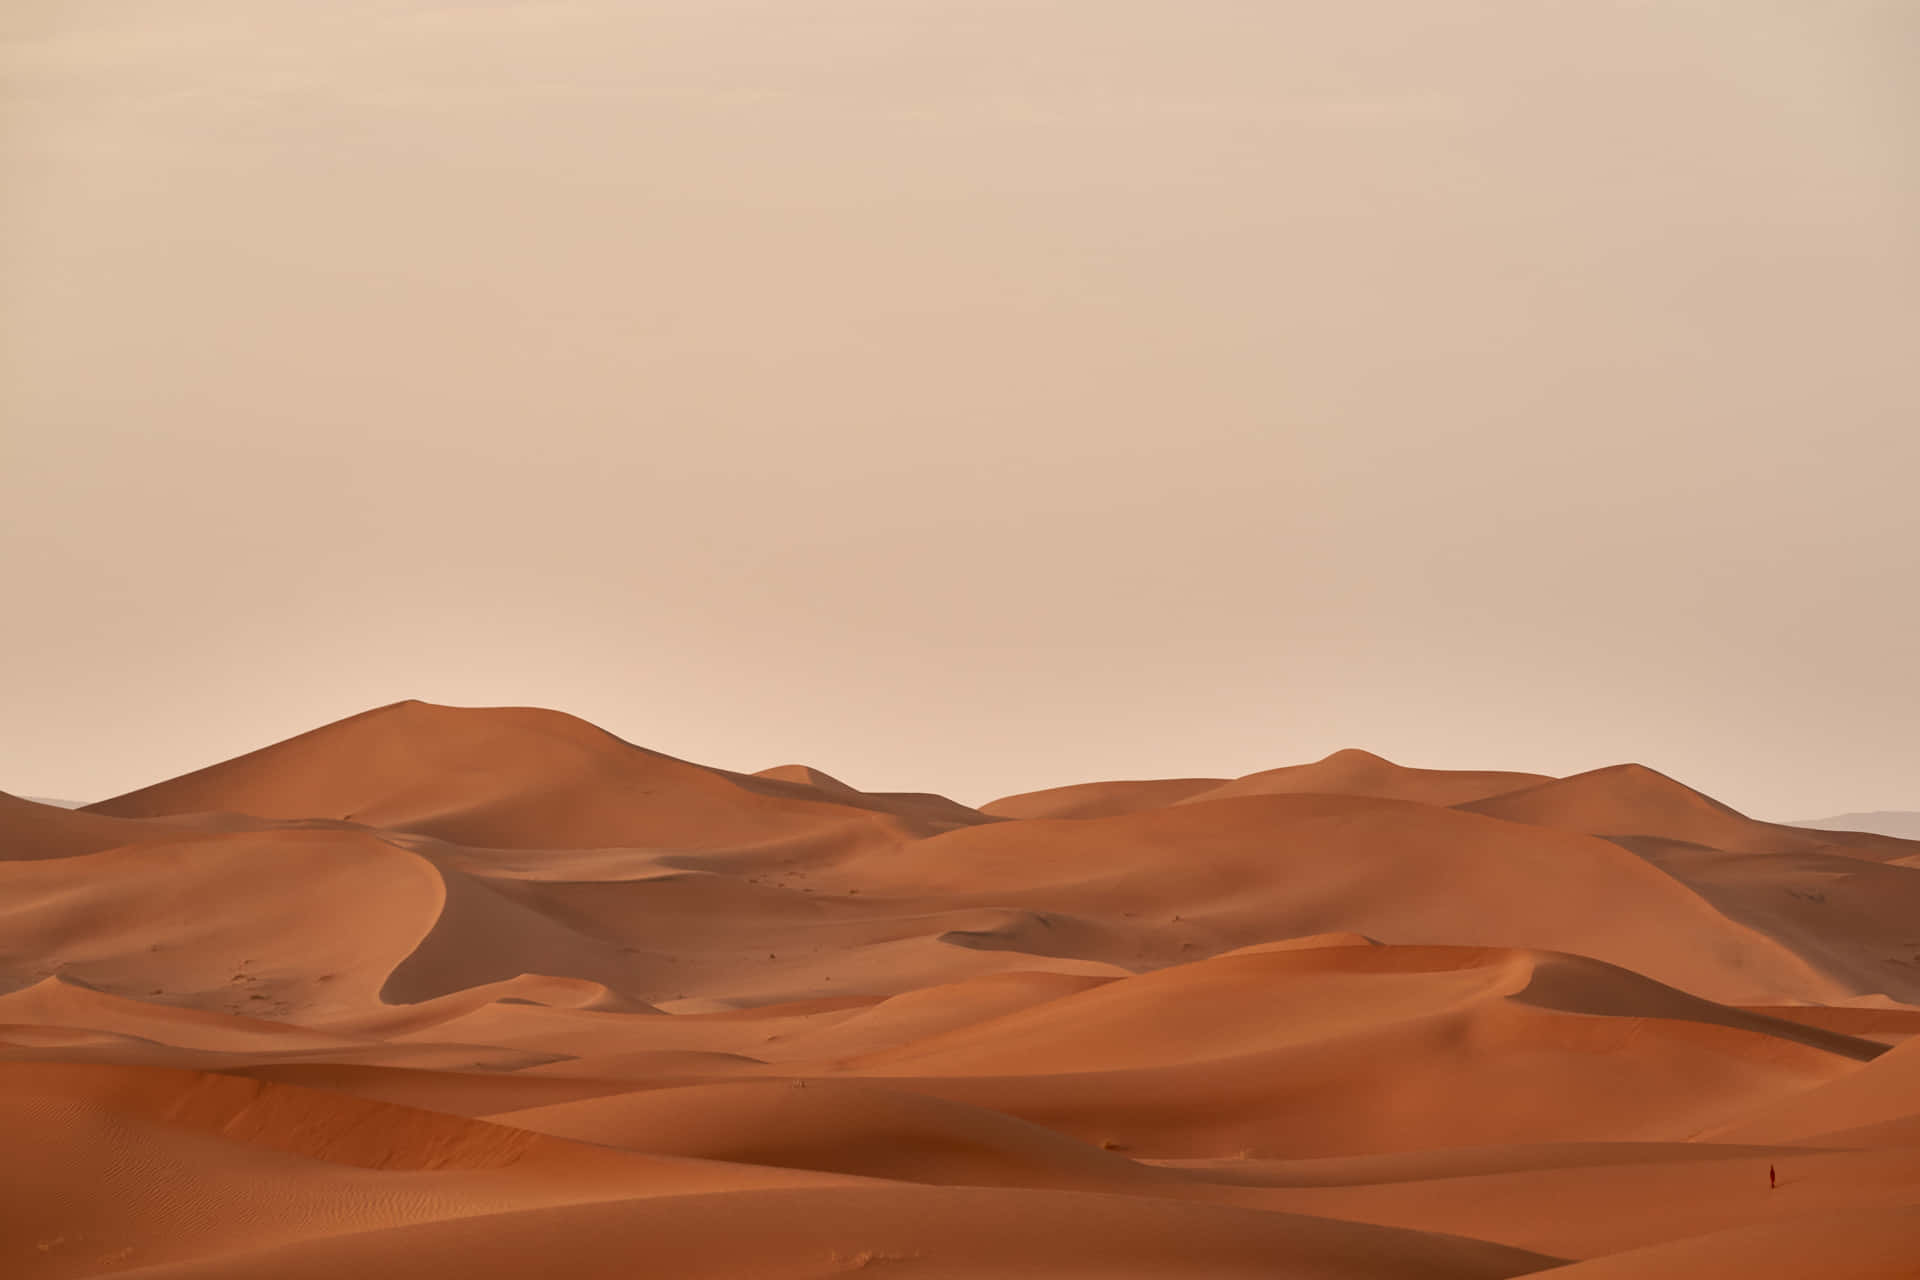 A Desert Landscape With Sand Dunes And A Sandstorm